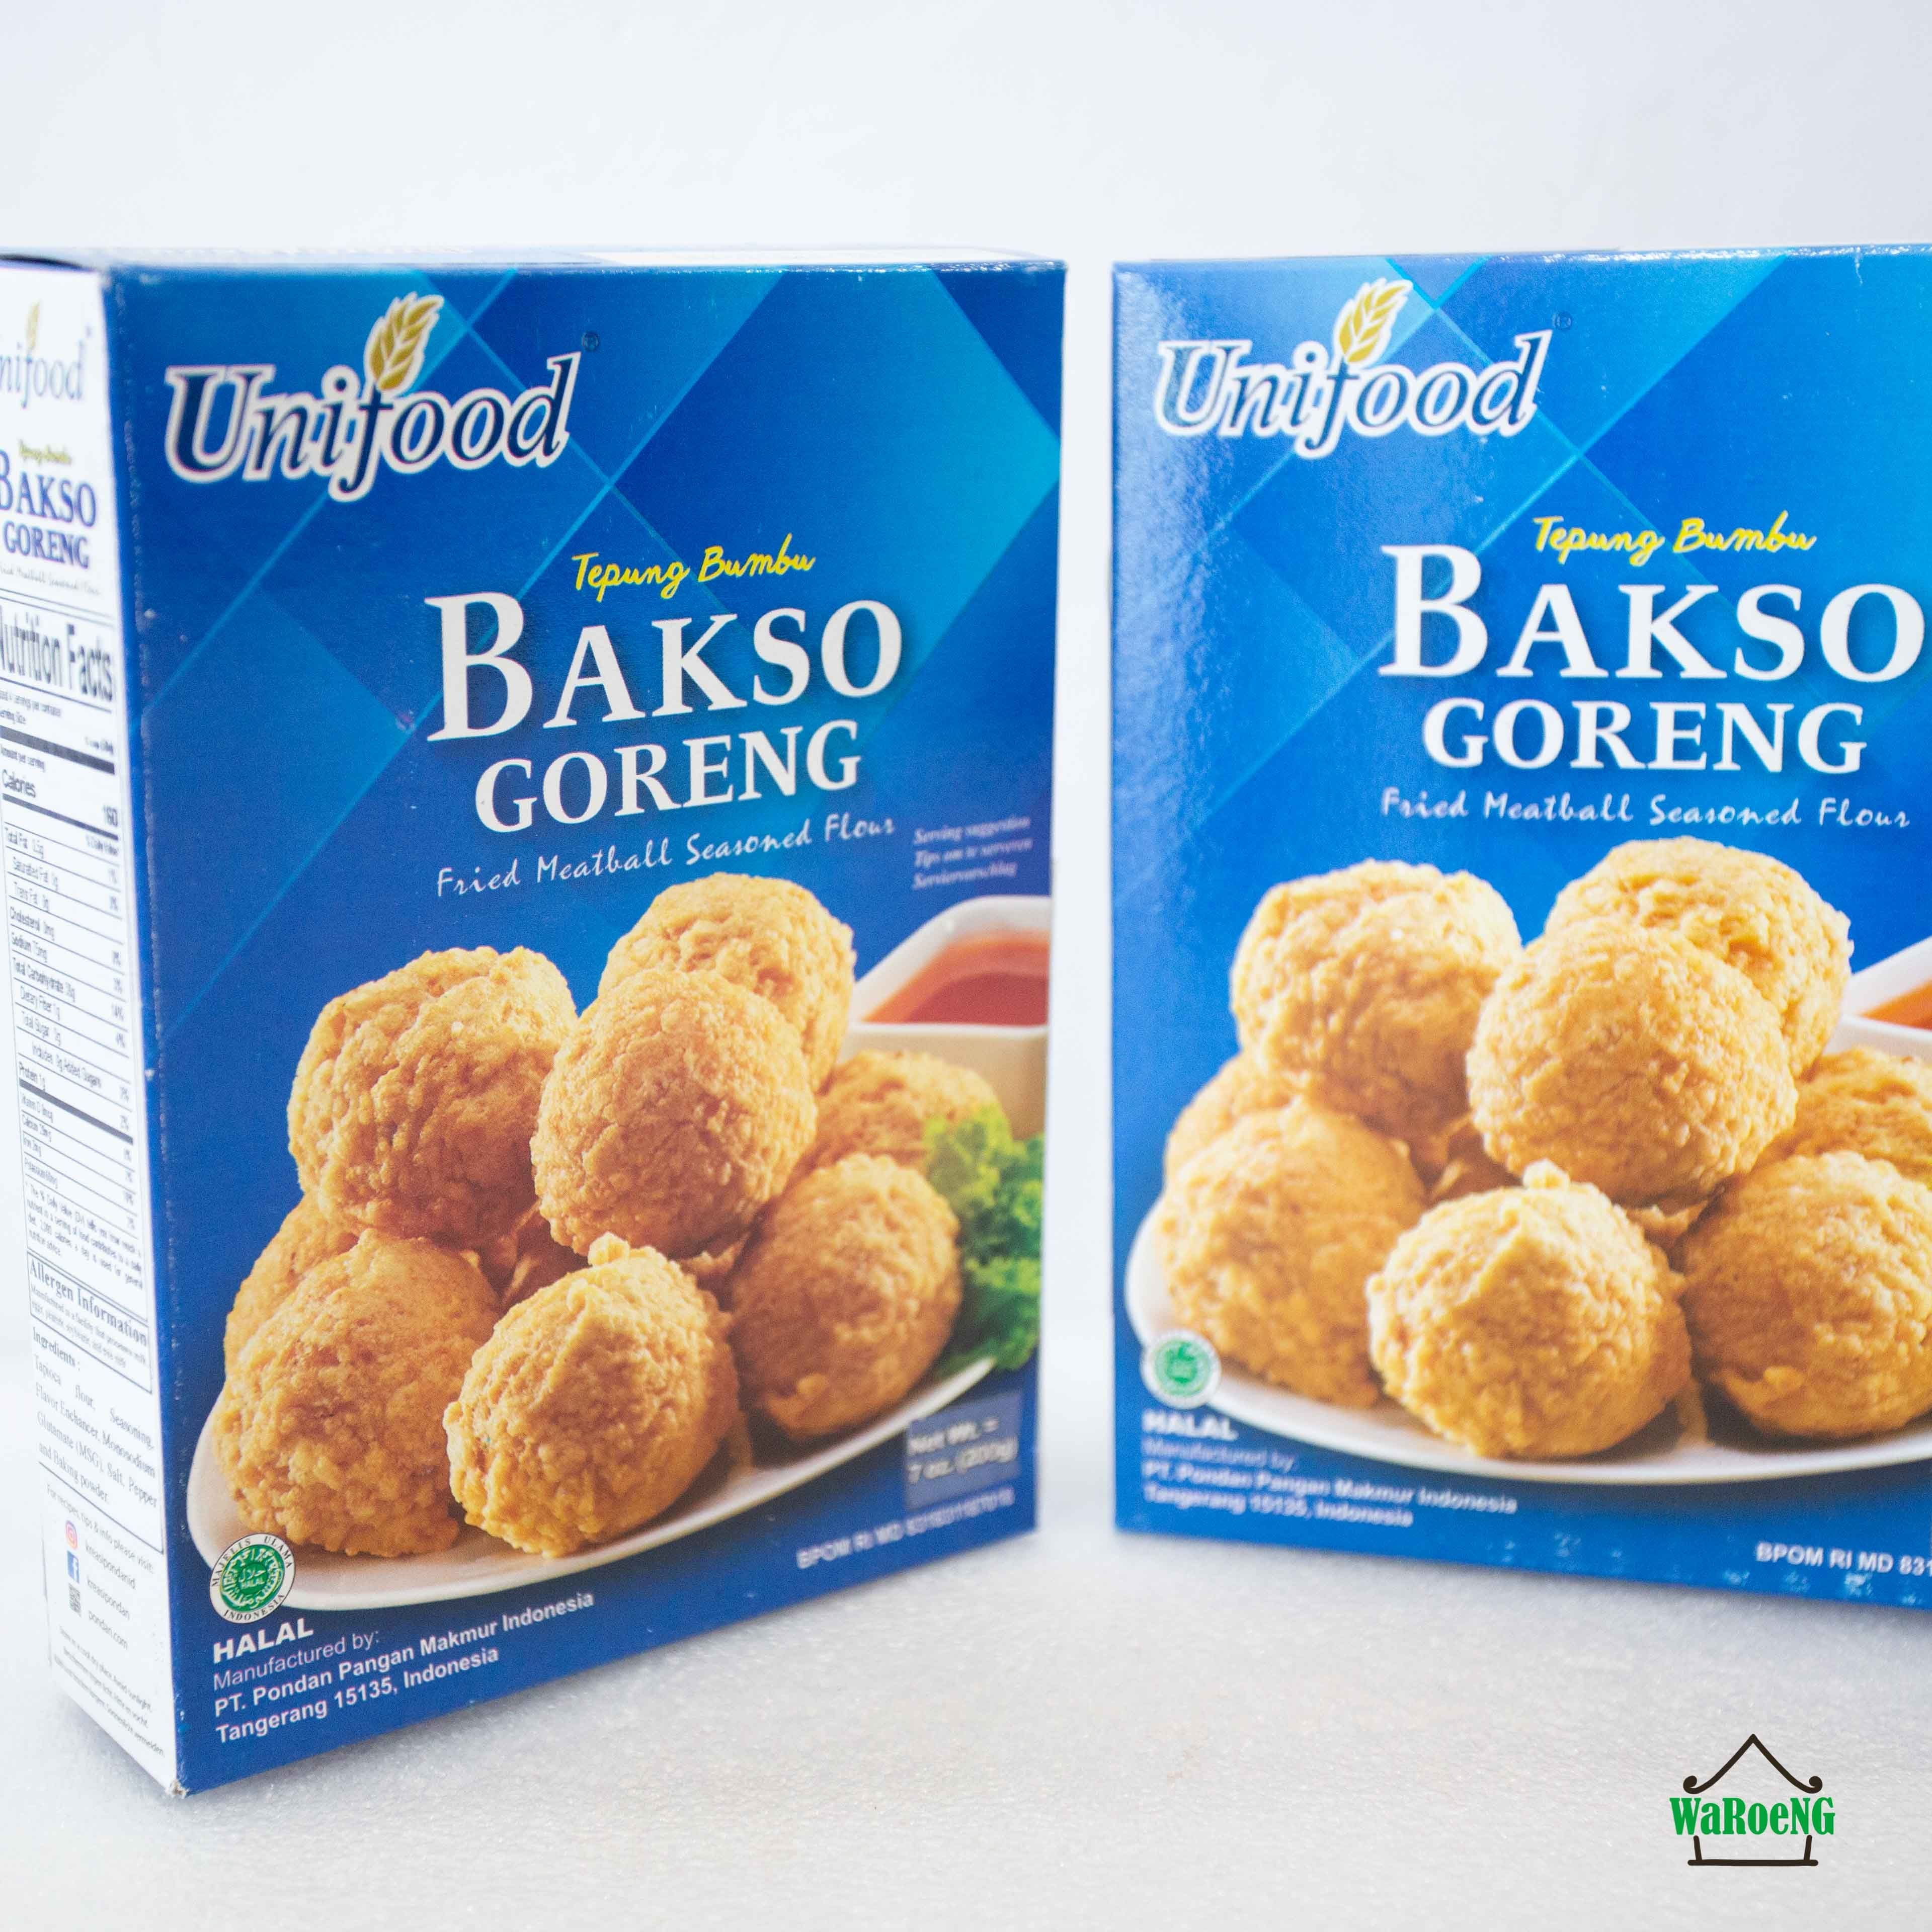 Unifood Tepung Bumbu Bakso Goreng (Fried Meatball Seasoned Flour)